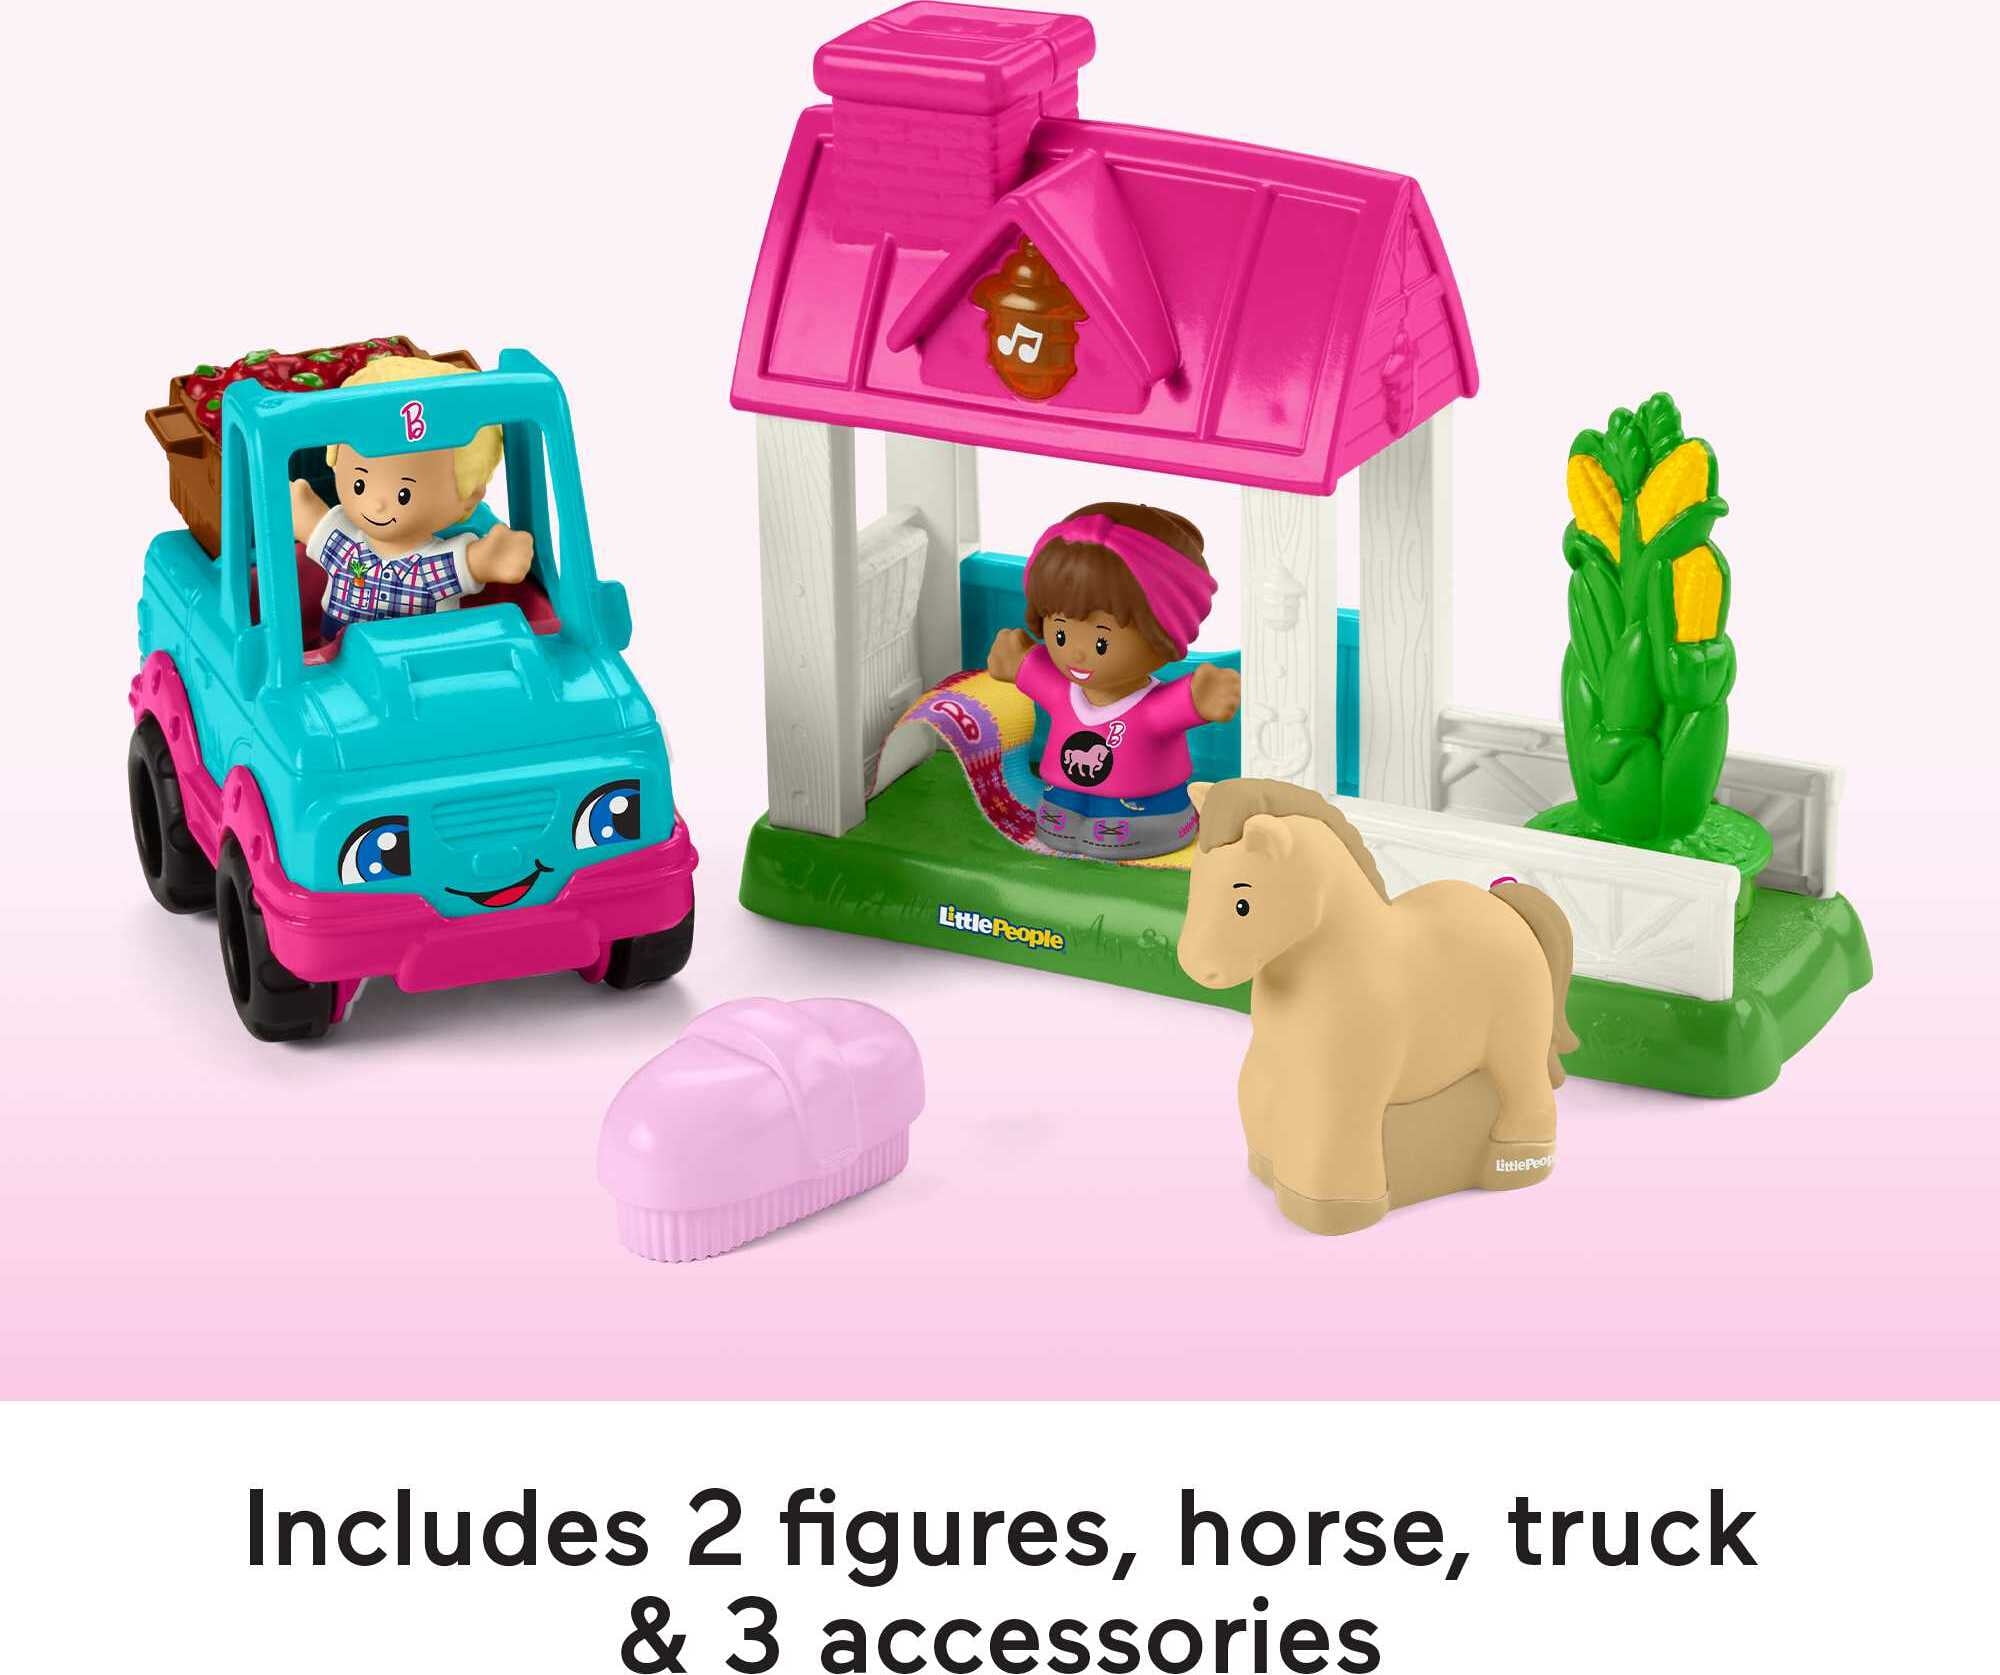 Opmærksomhed Sober veltalende Fisher-Price Little People Barbie Horse Stable Toddler Playset with Light  Sounds & 7 Pieces - Walmart.com